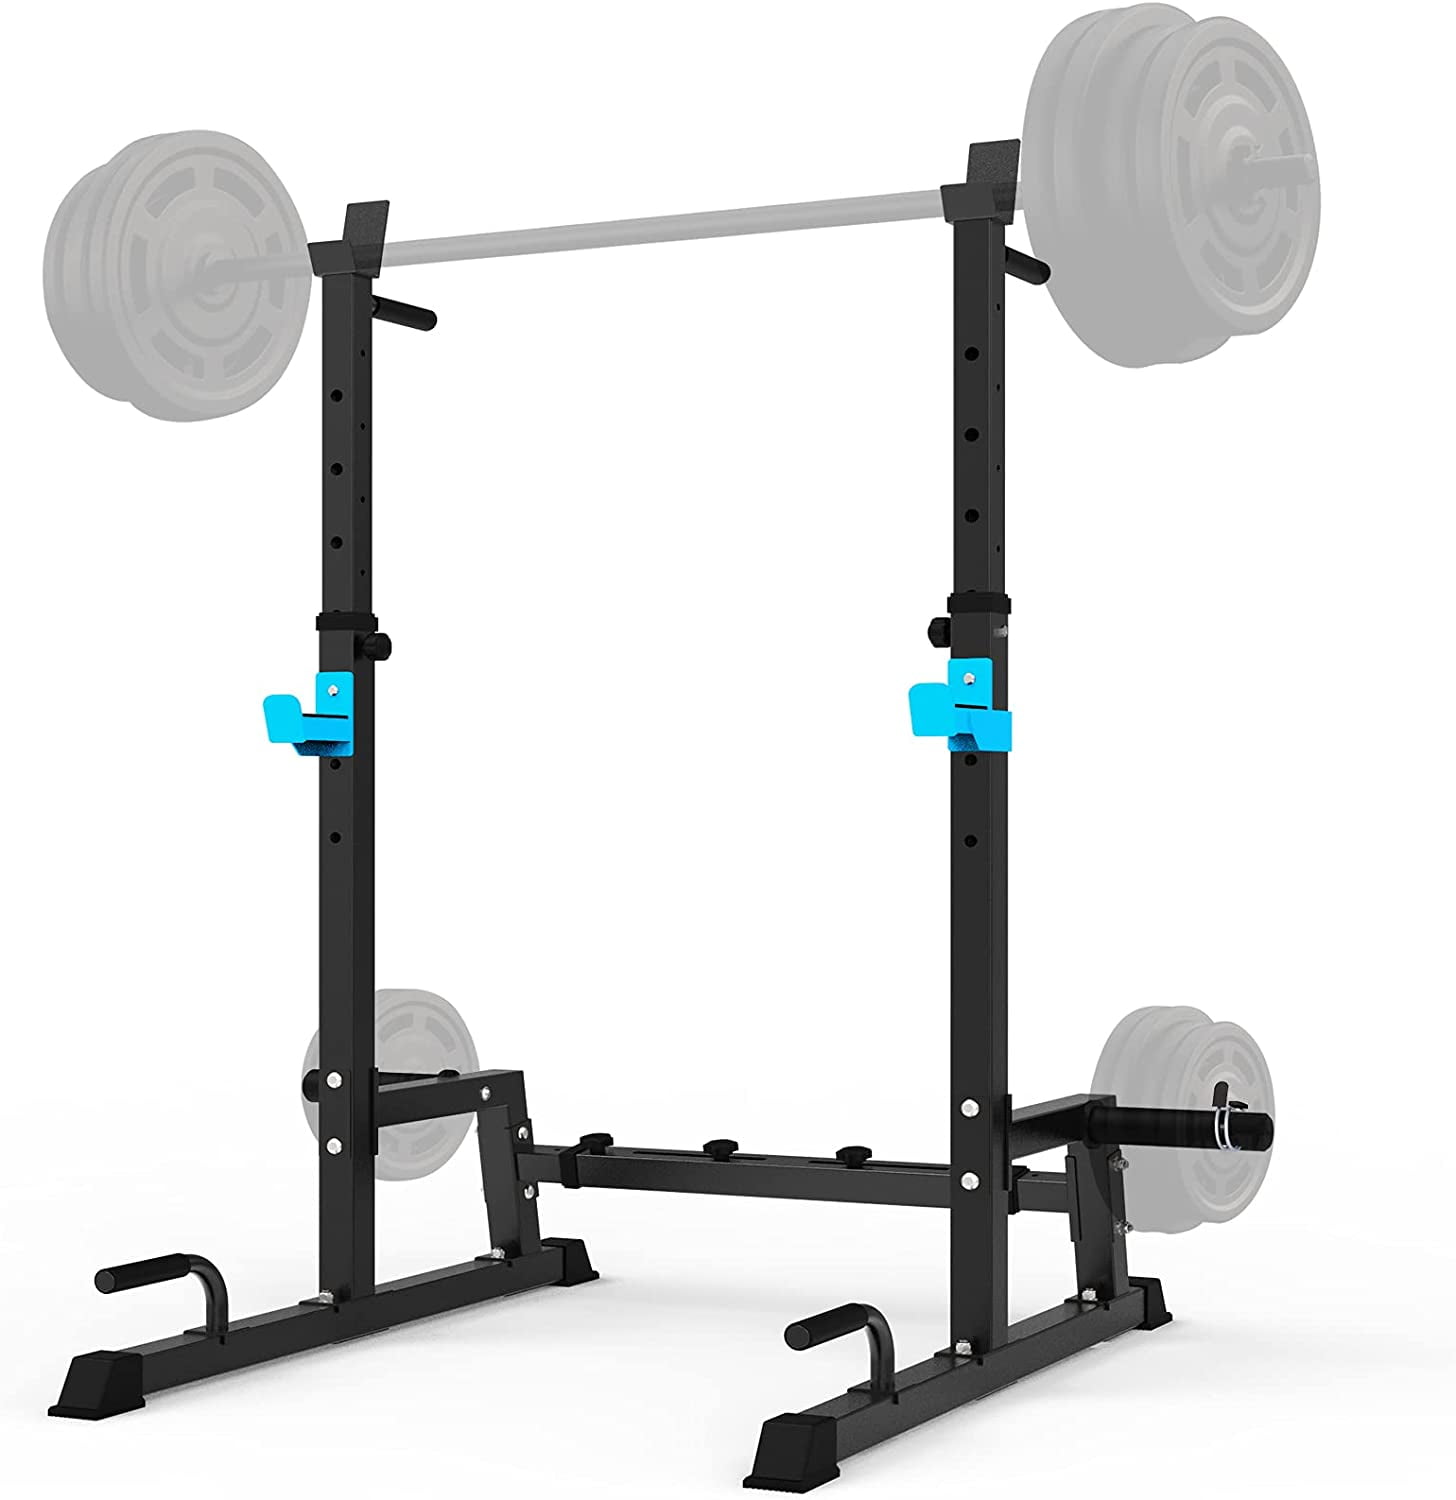 JX FITNESS 150LB Multifunctional Full Body Home Gym Equipment for